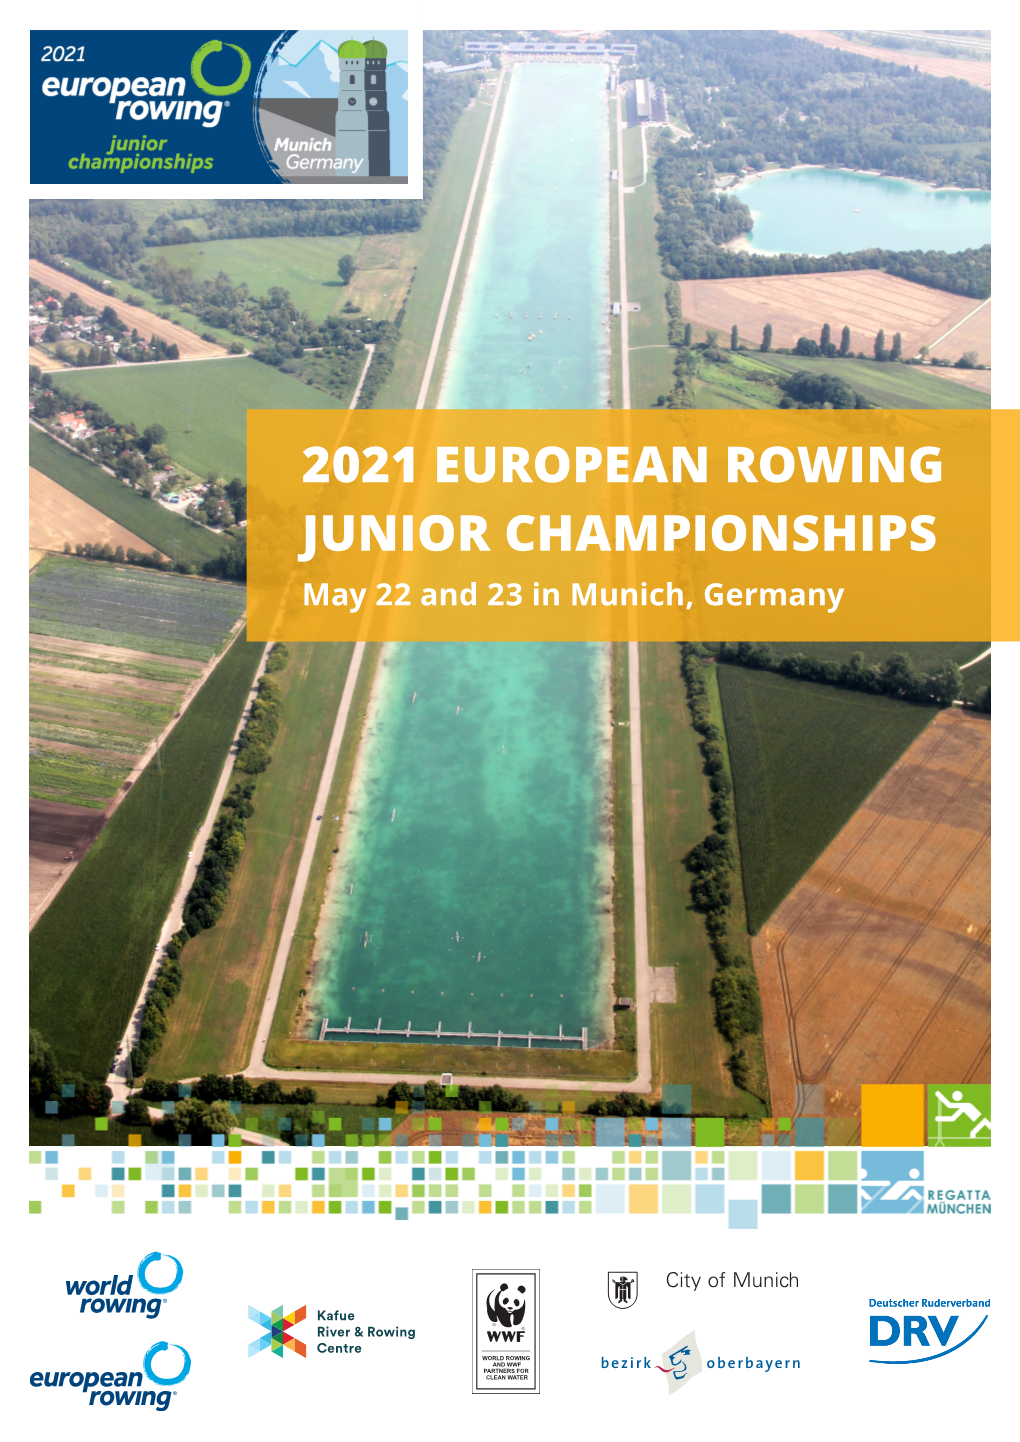 2021 European Rowing Junior Championships Munich